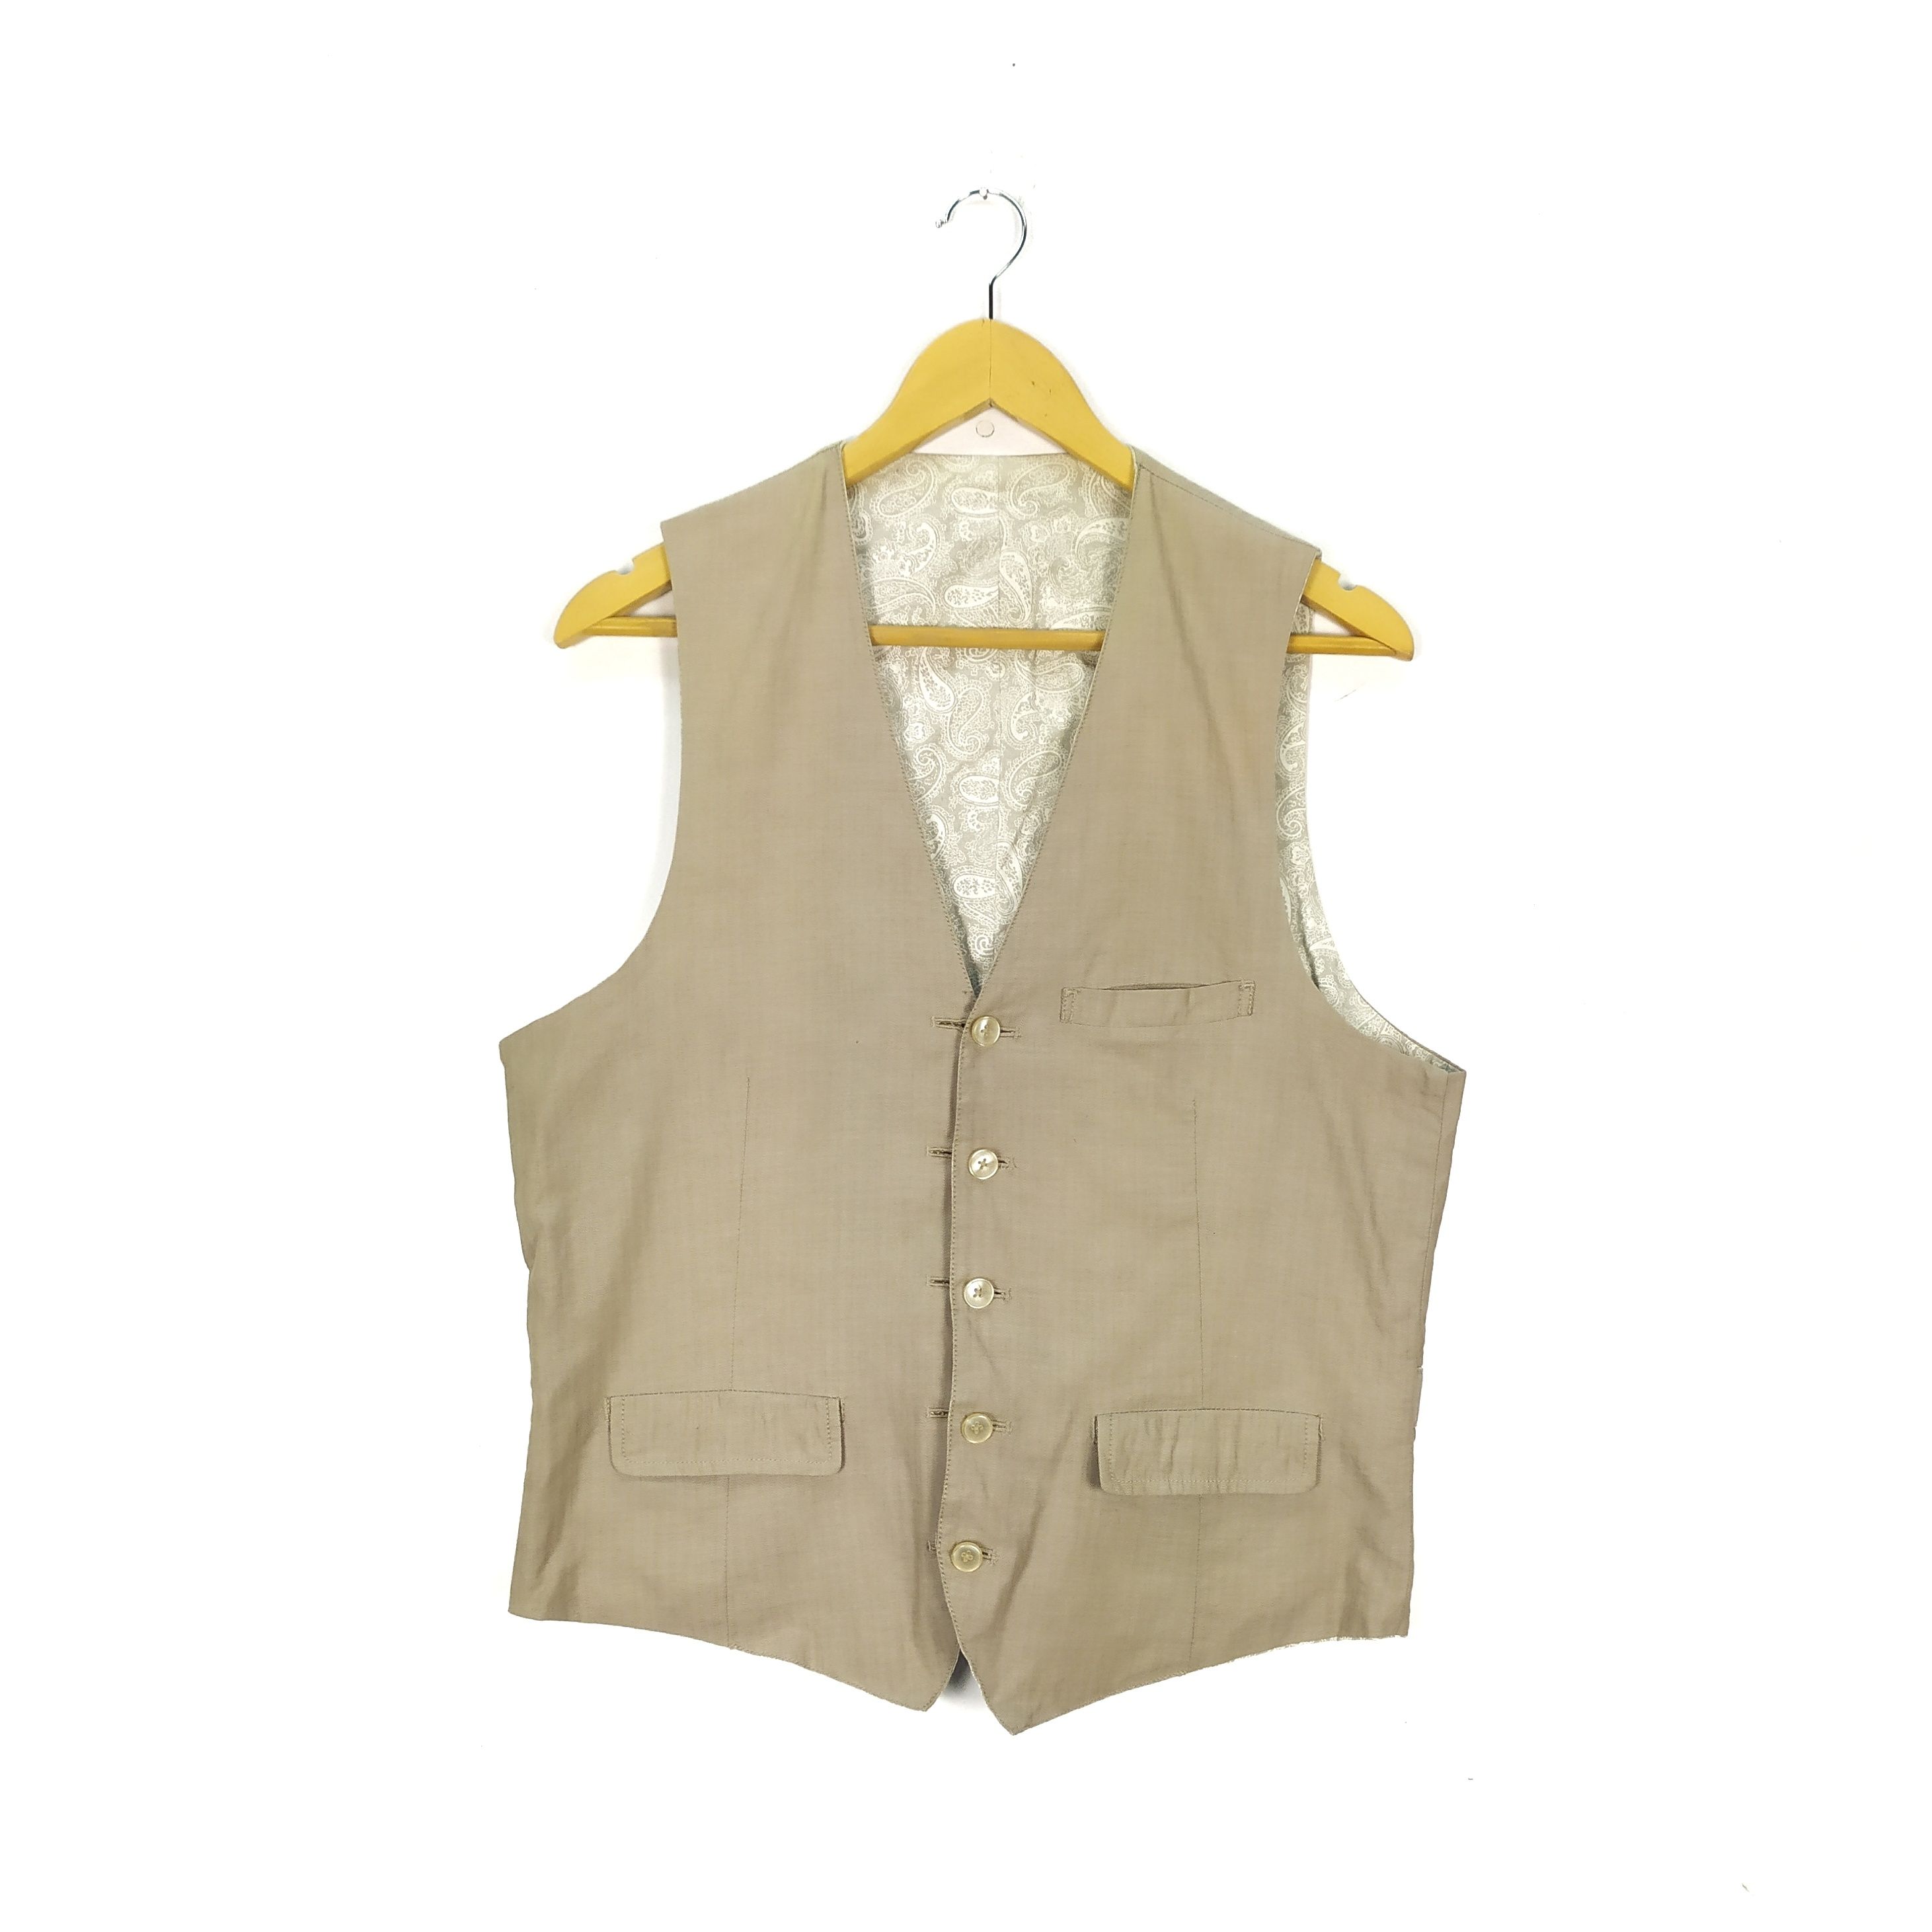 Takaiq Japanese Brand Designer Vest - 1